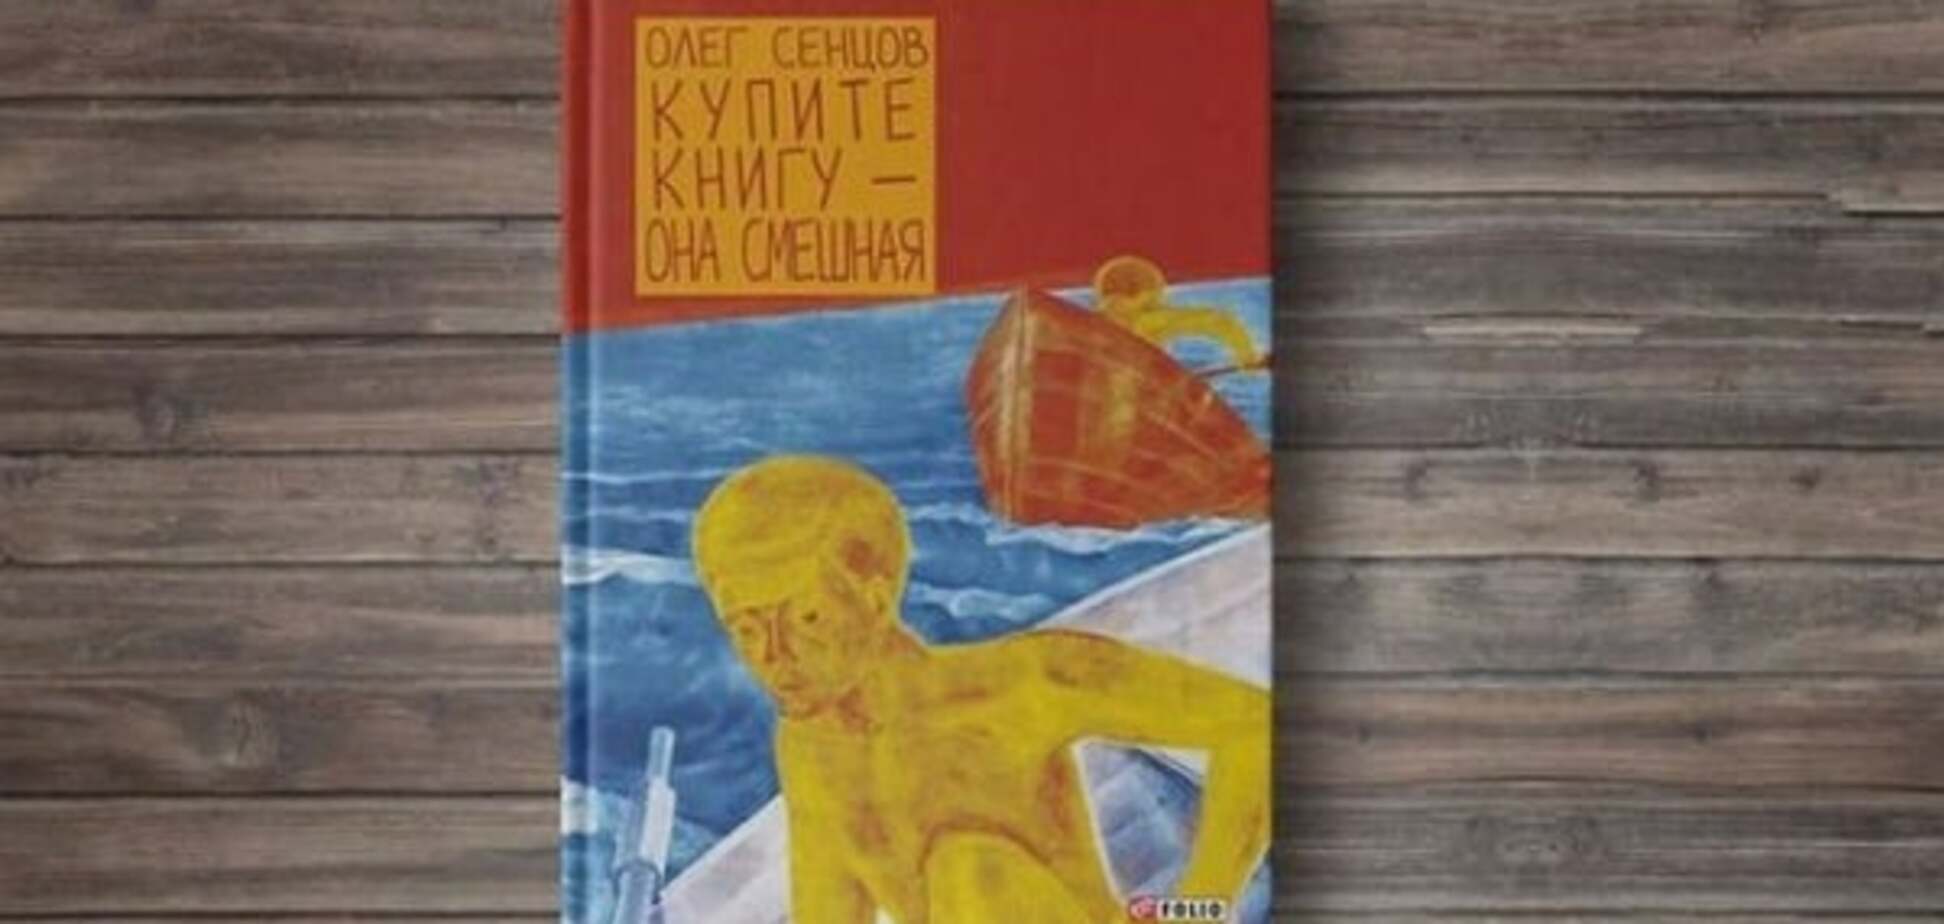 'Купите книгу – она смешная': в Одессе презентовали роман Сенцова